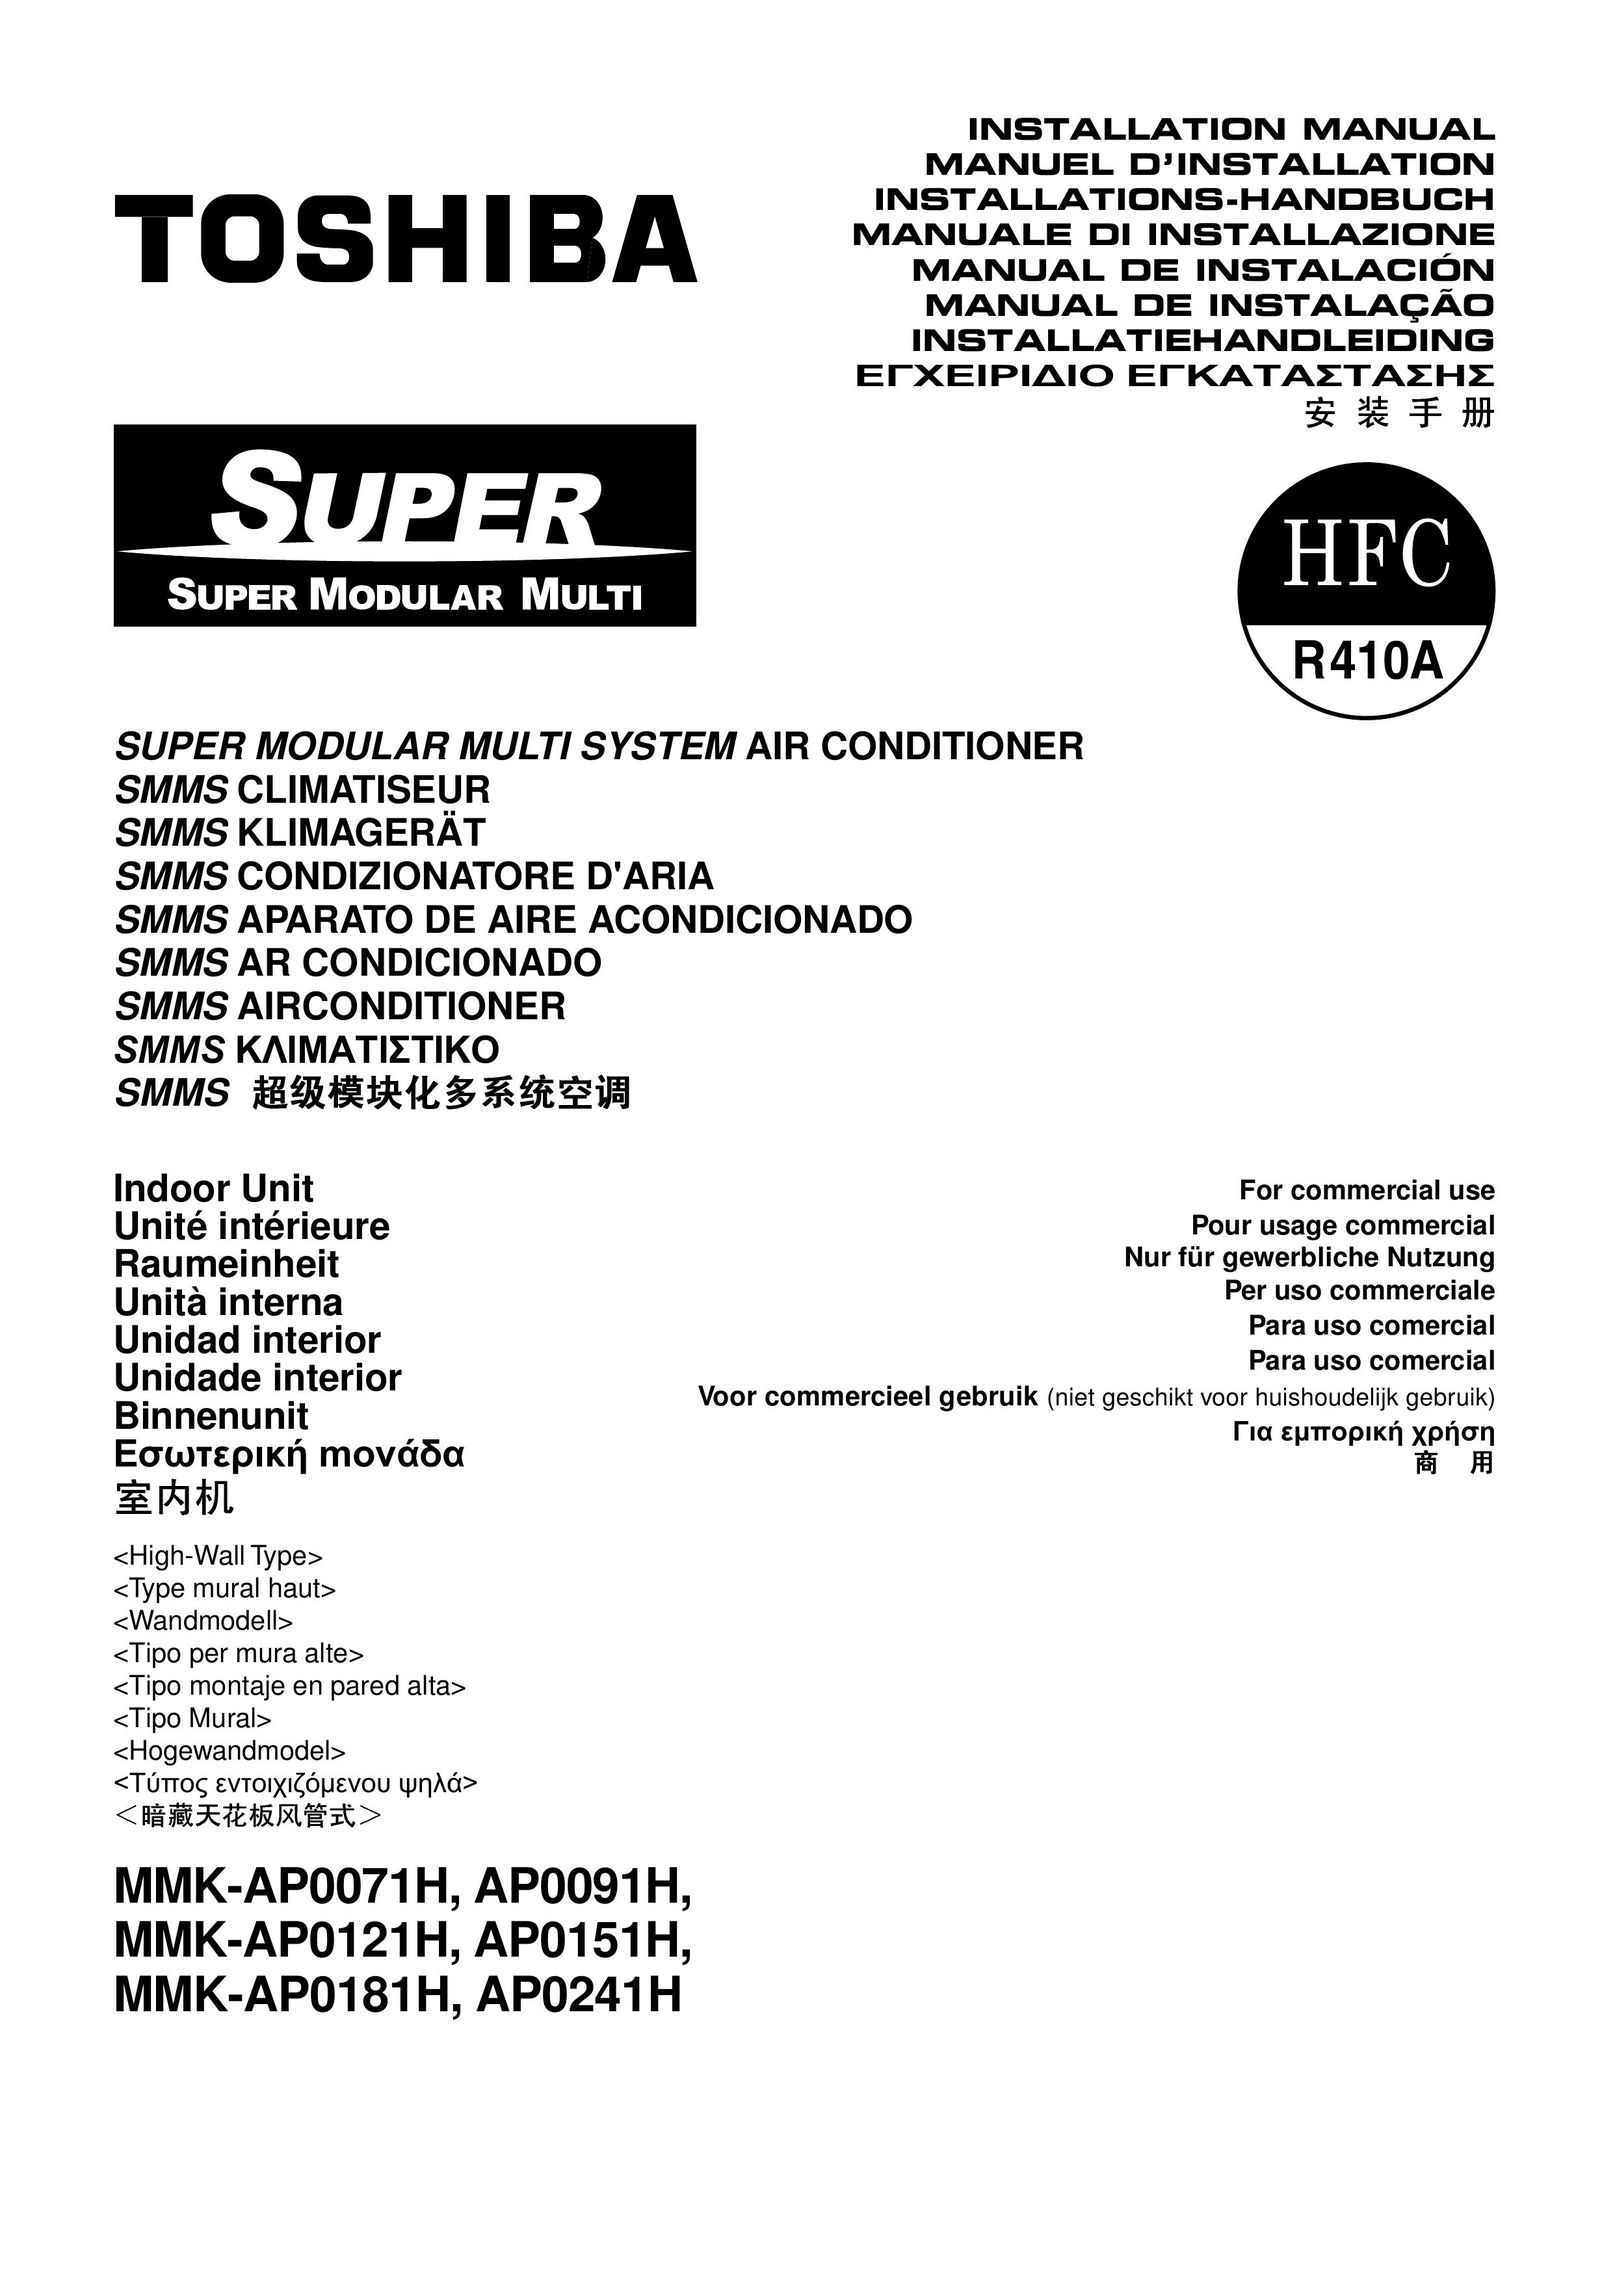 Pentax MMK-AP0071H Air Conditioner User Manual